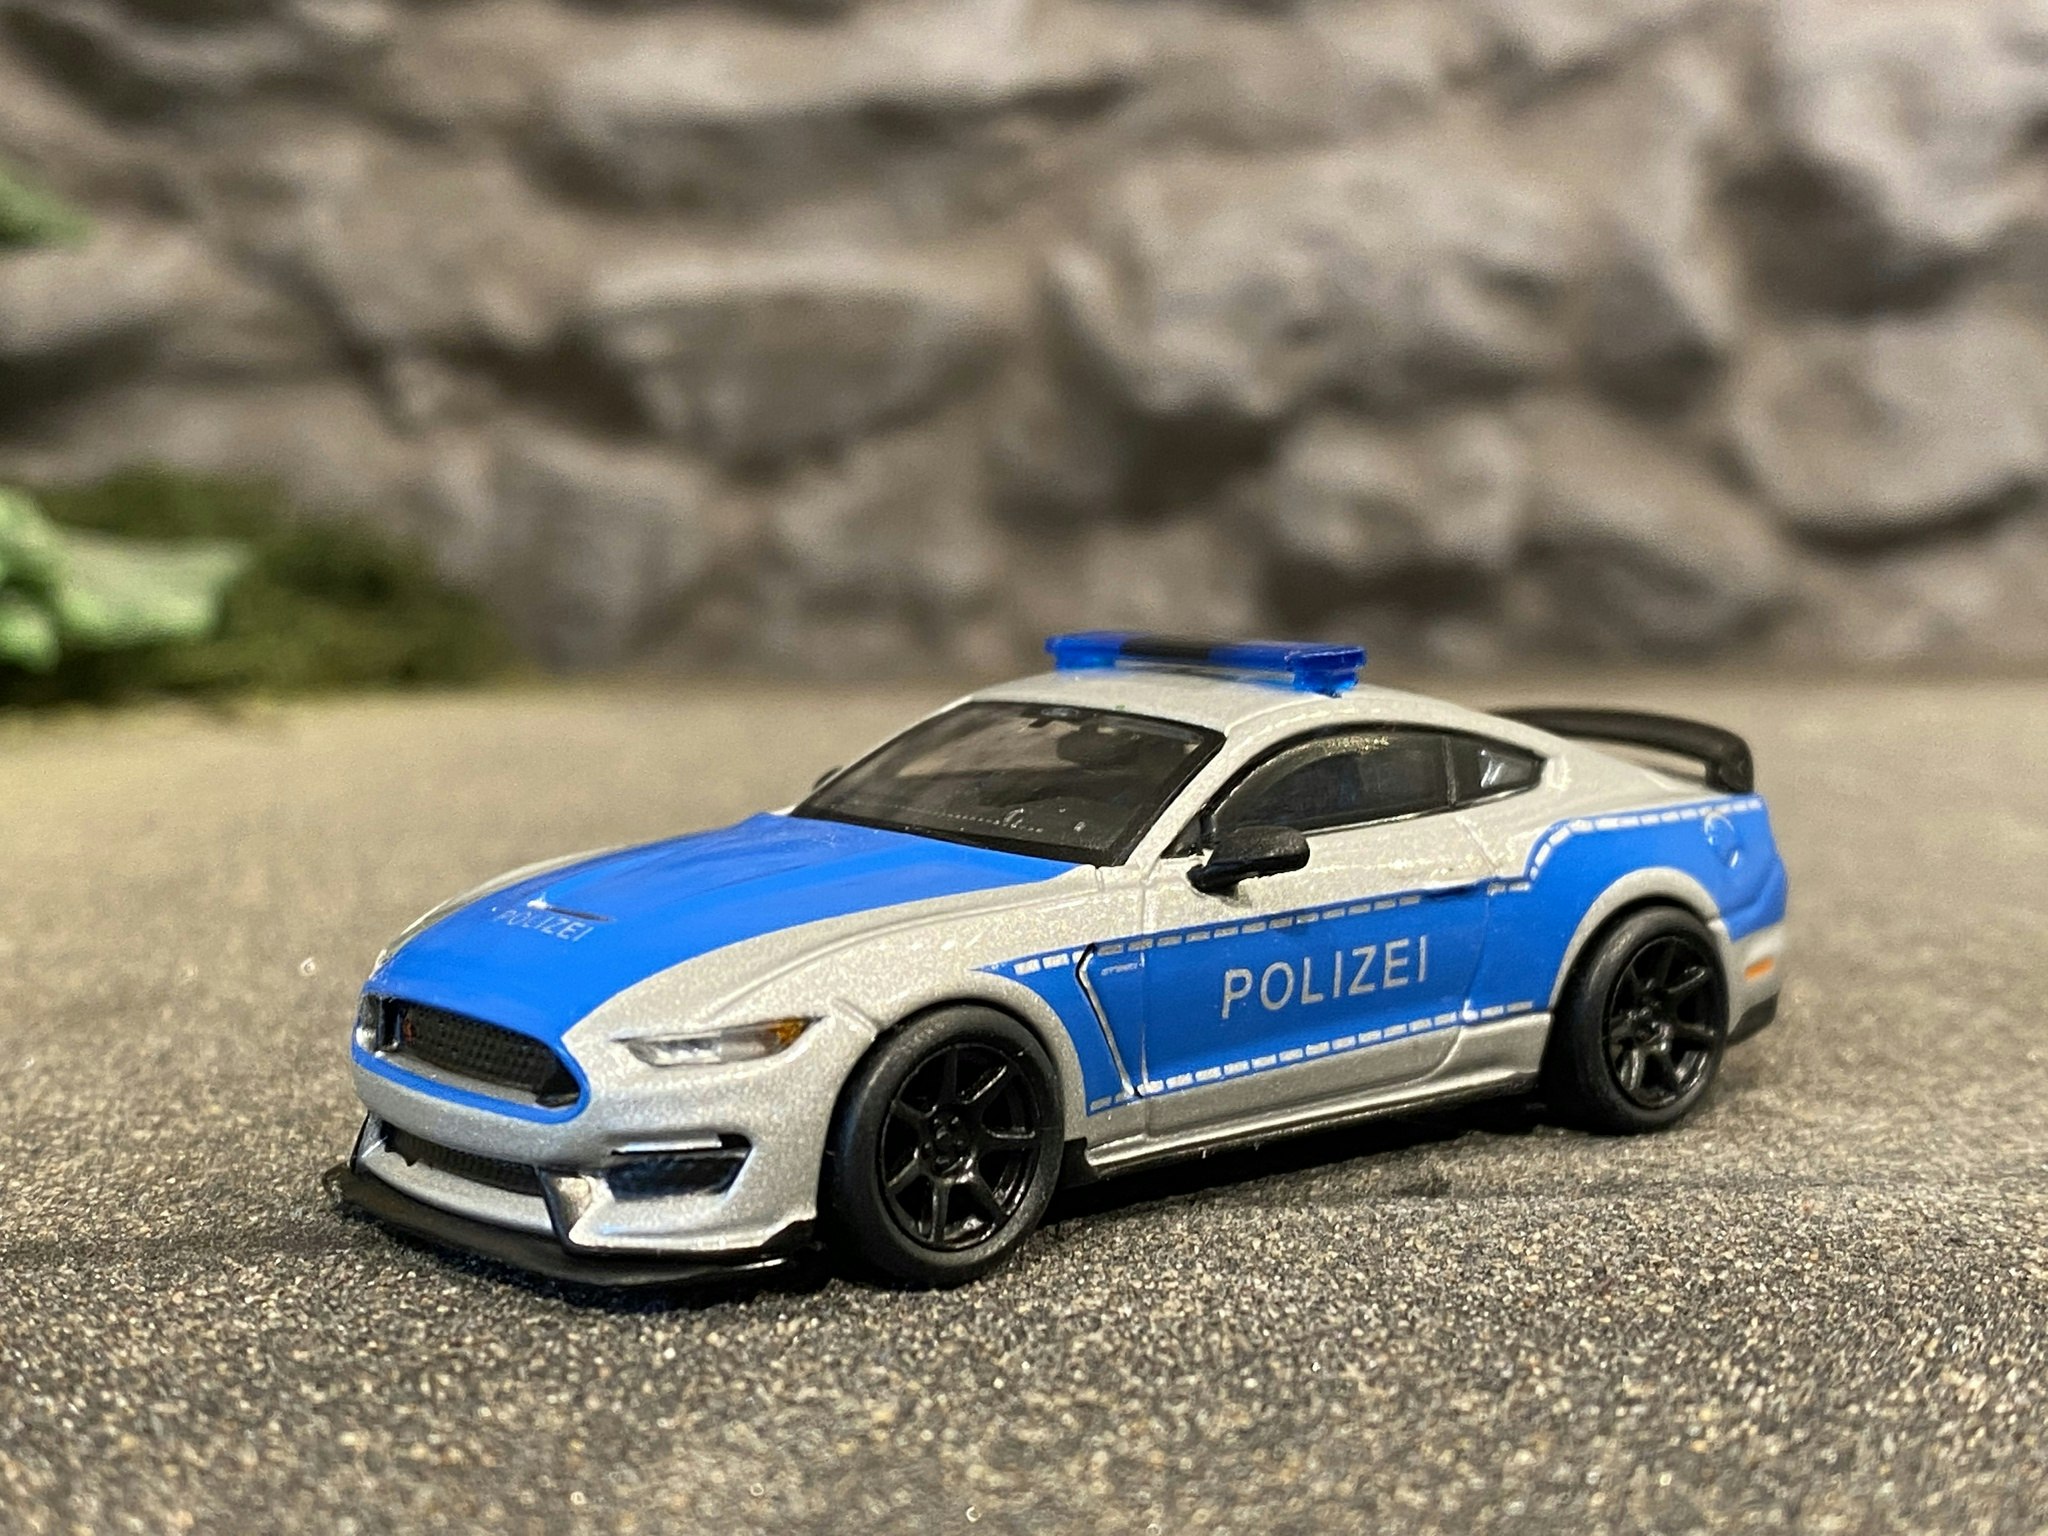 Skala 1/64 Exklusiv Ford Mustang GT, Polizei,Tysk Polis från TARMAC works